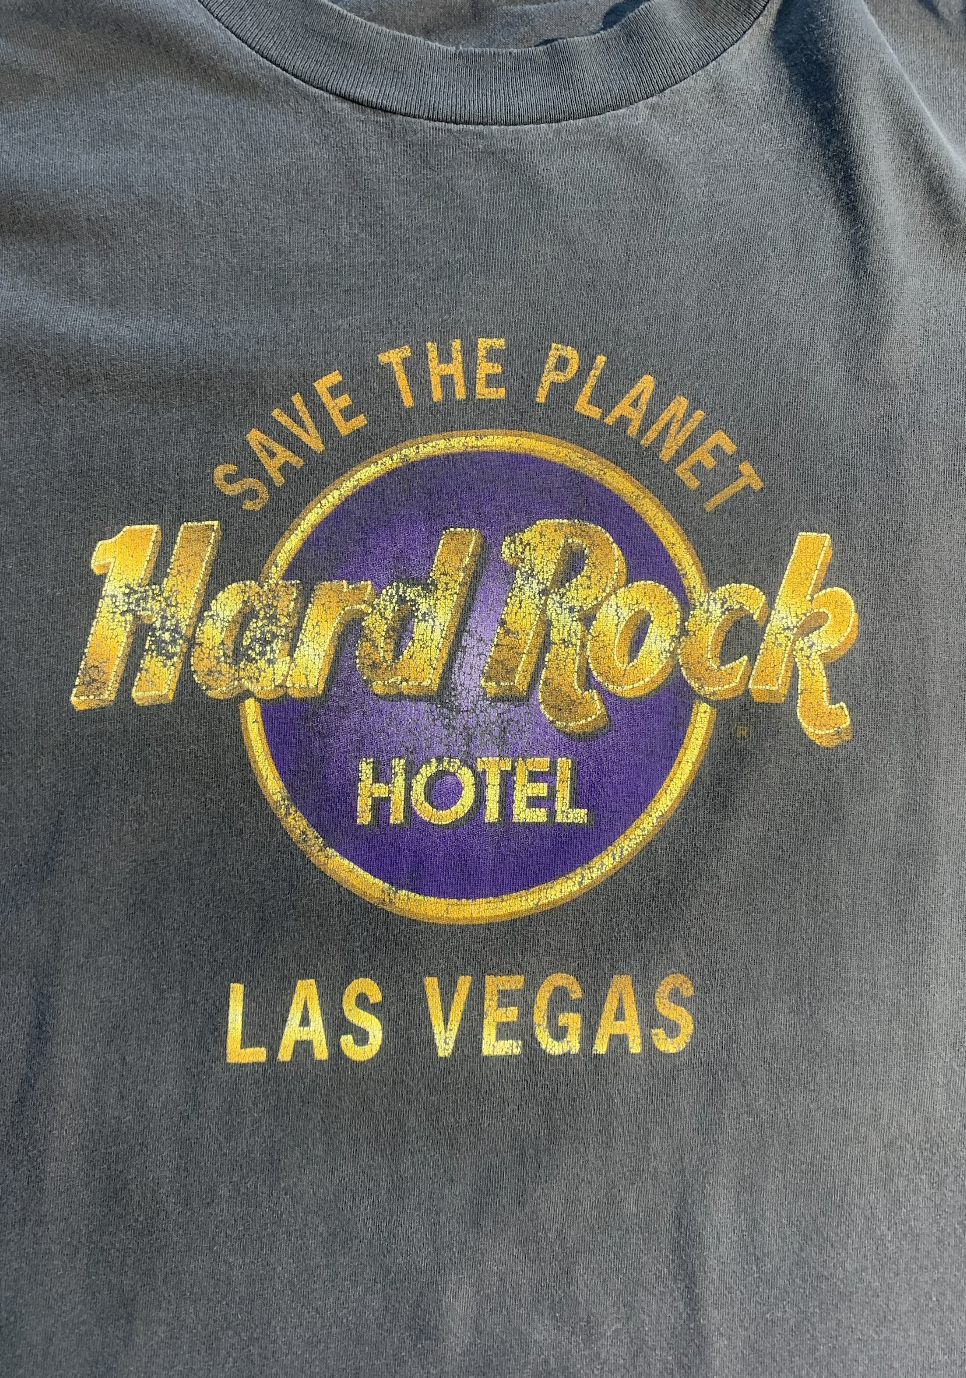 Vintage Hard Rock Save The Planet T-shirt